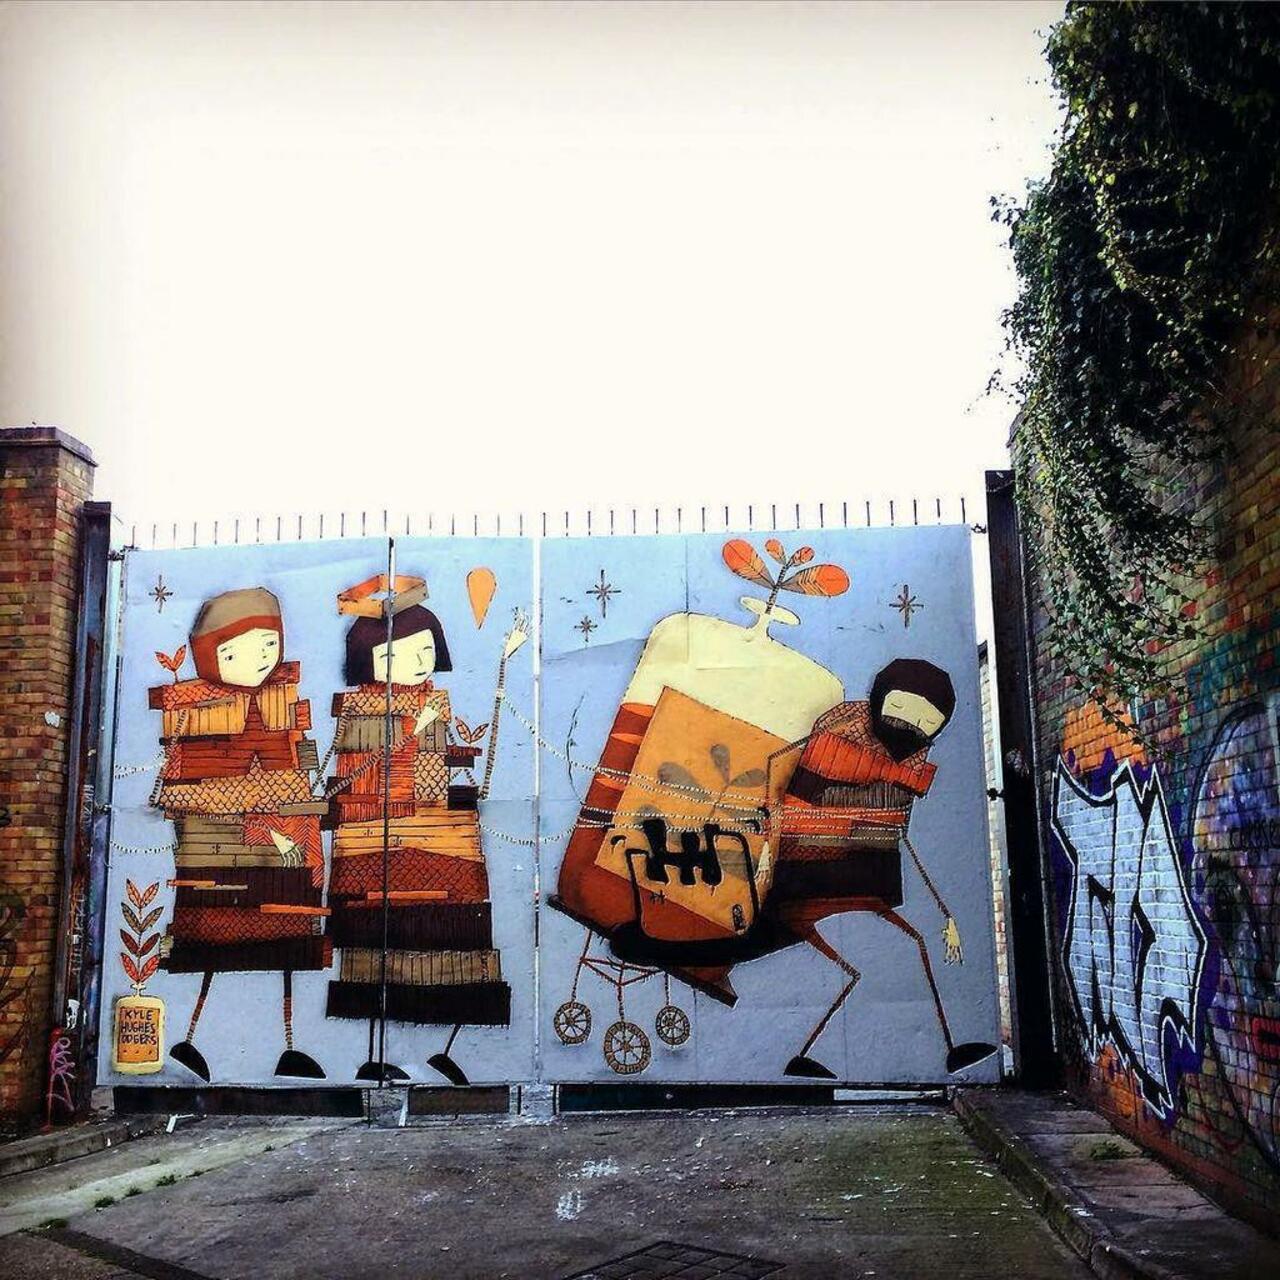 RT @StArtEverywhere: #graffitiporn  #wallporn #mural  #murales  #graffitiporn #lovestreetart #streetart #graffiti #london #loveshoreditc… http://t.co/3wzTOX3wZD